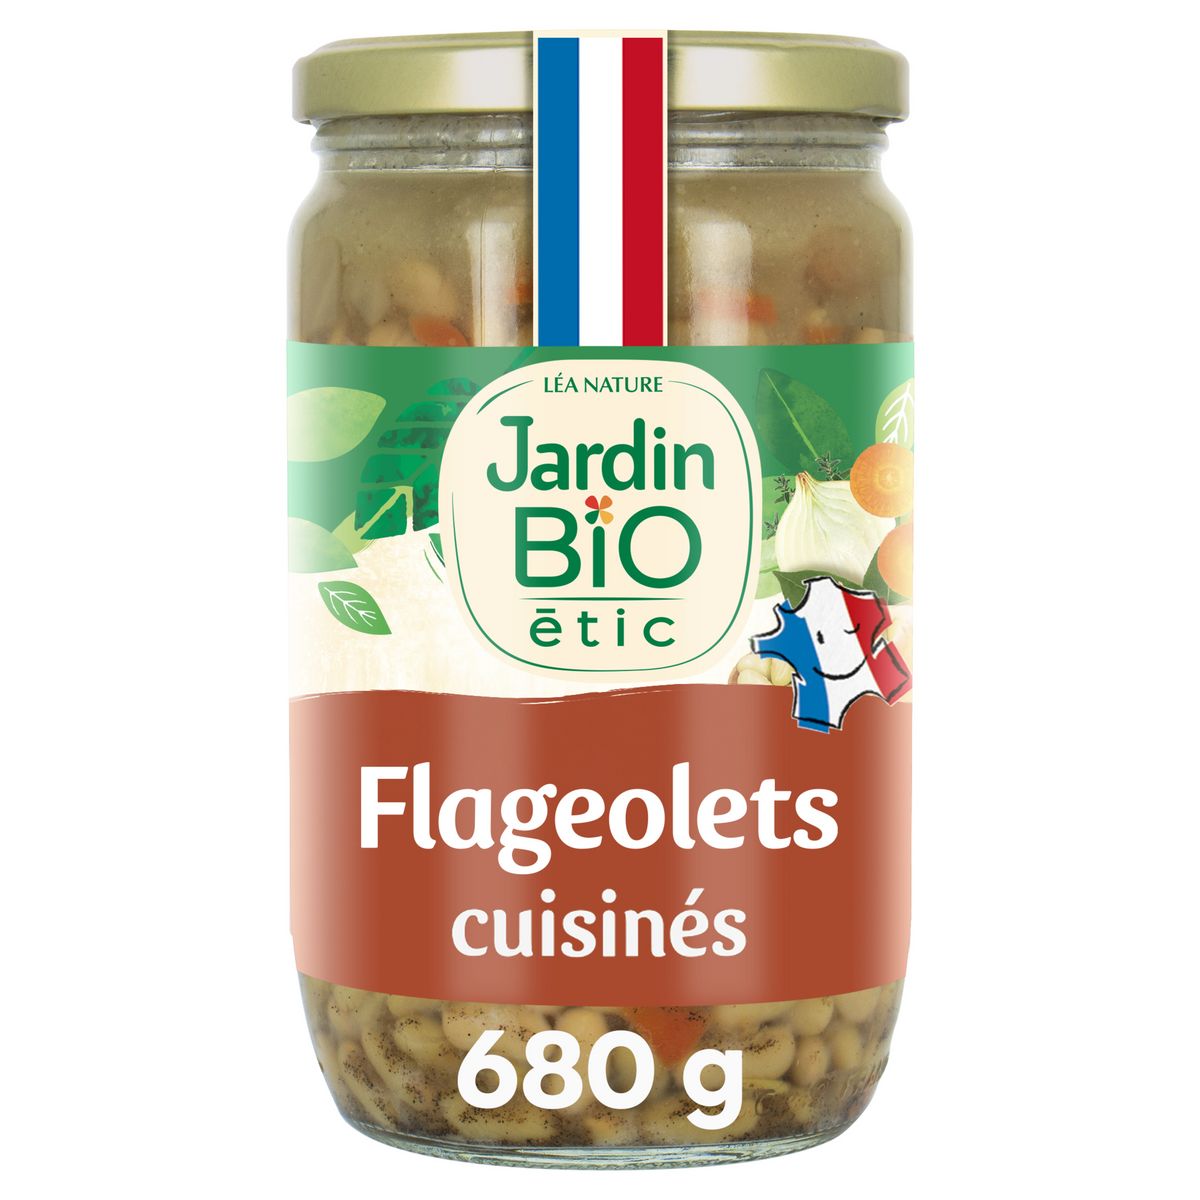 JARDIN BIO ETIC Flageolets cuisinés en bocal 680g